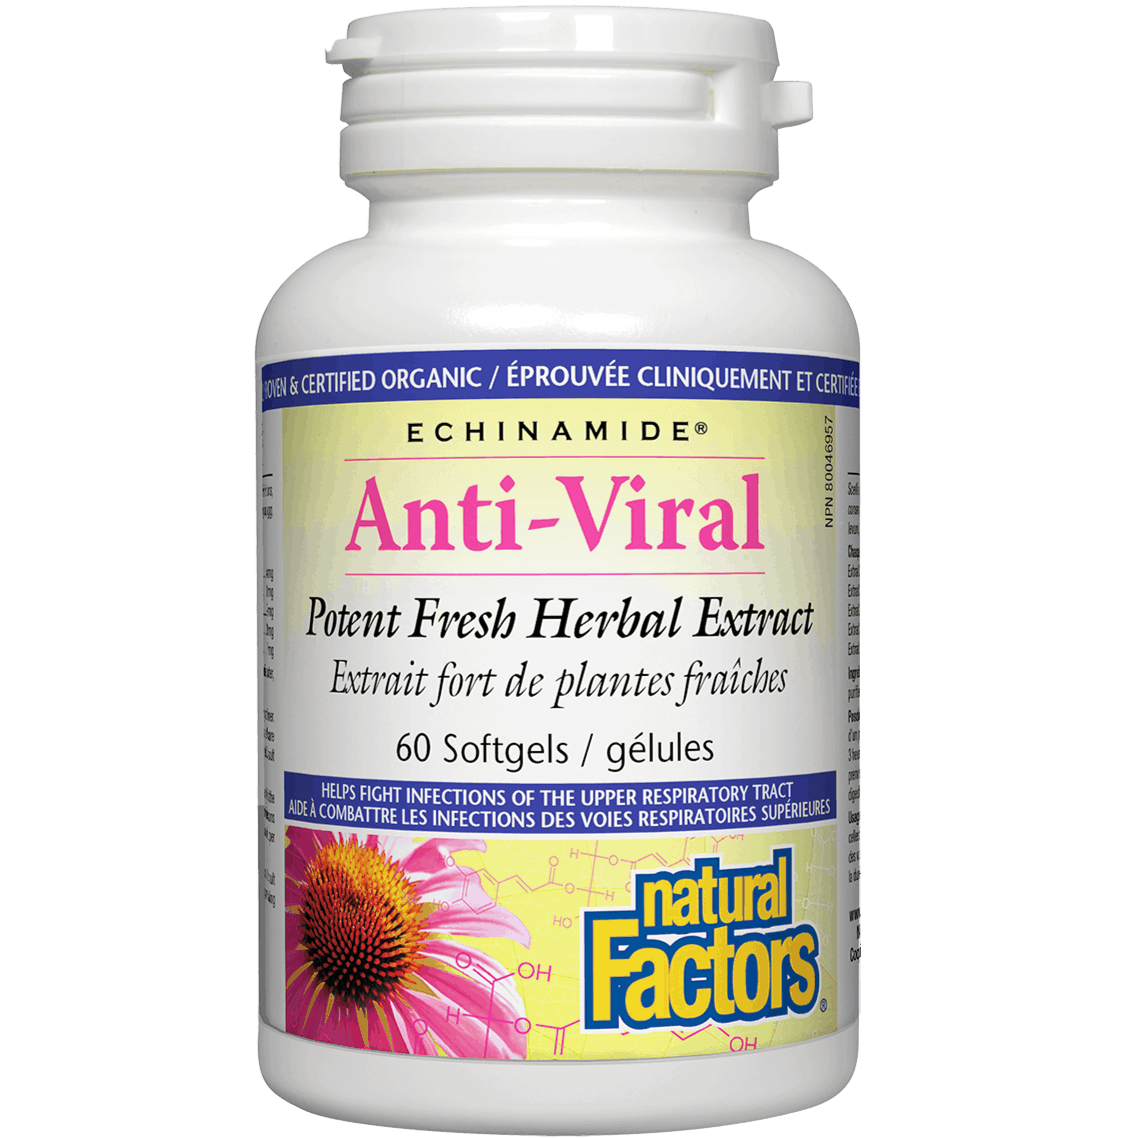 Natural Factors Echinamide Anti-Viral Potent Fresh Herbal Extract 60 Softgels Cough, Cold & Flu at Village Vitamin Store